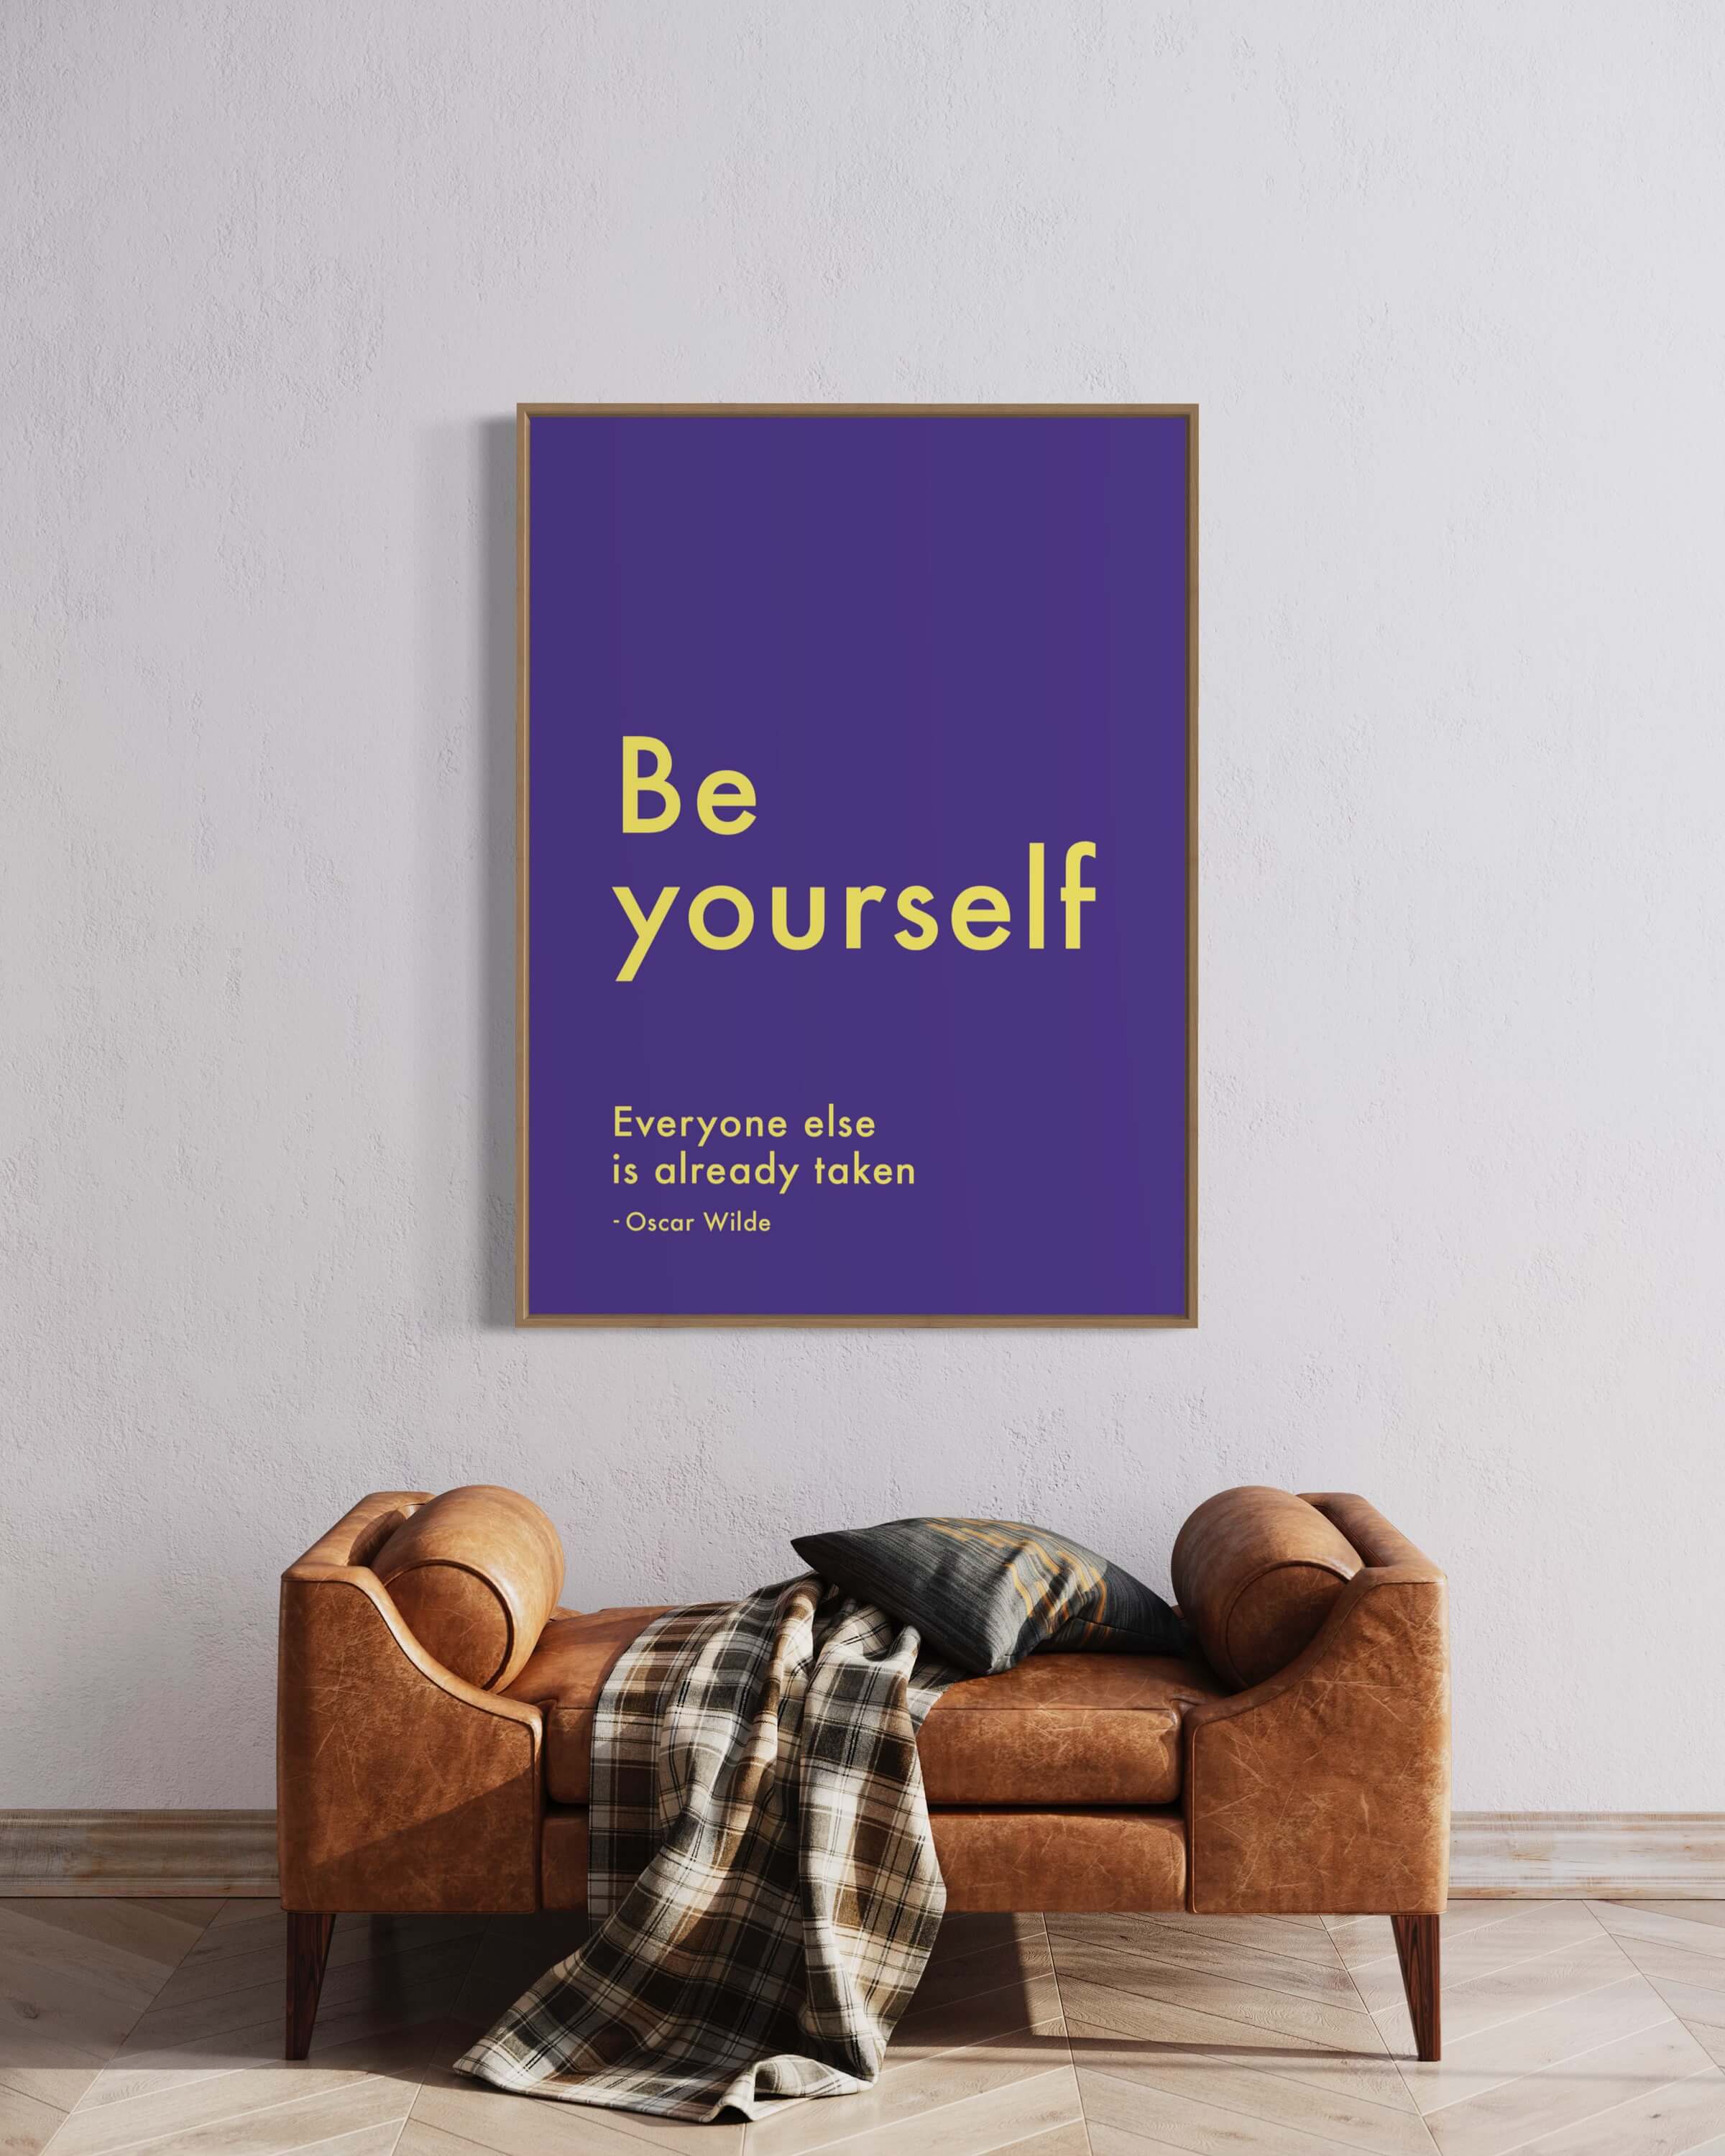 Be yourself. Everyone else is already taken. - purple